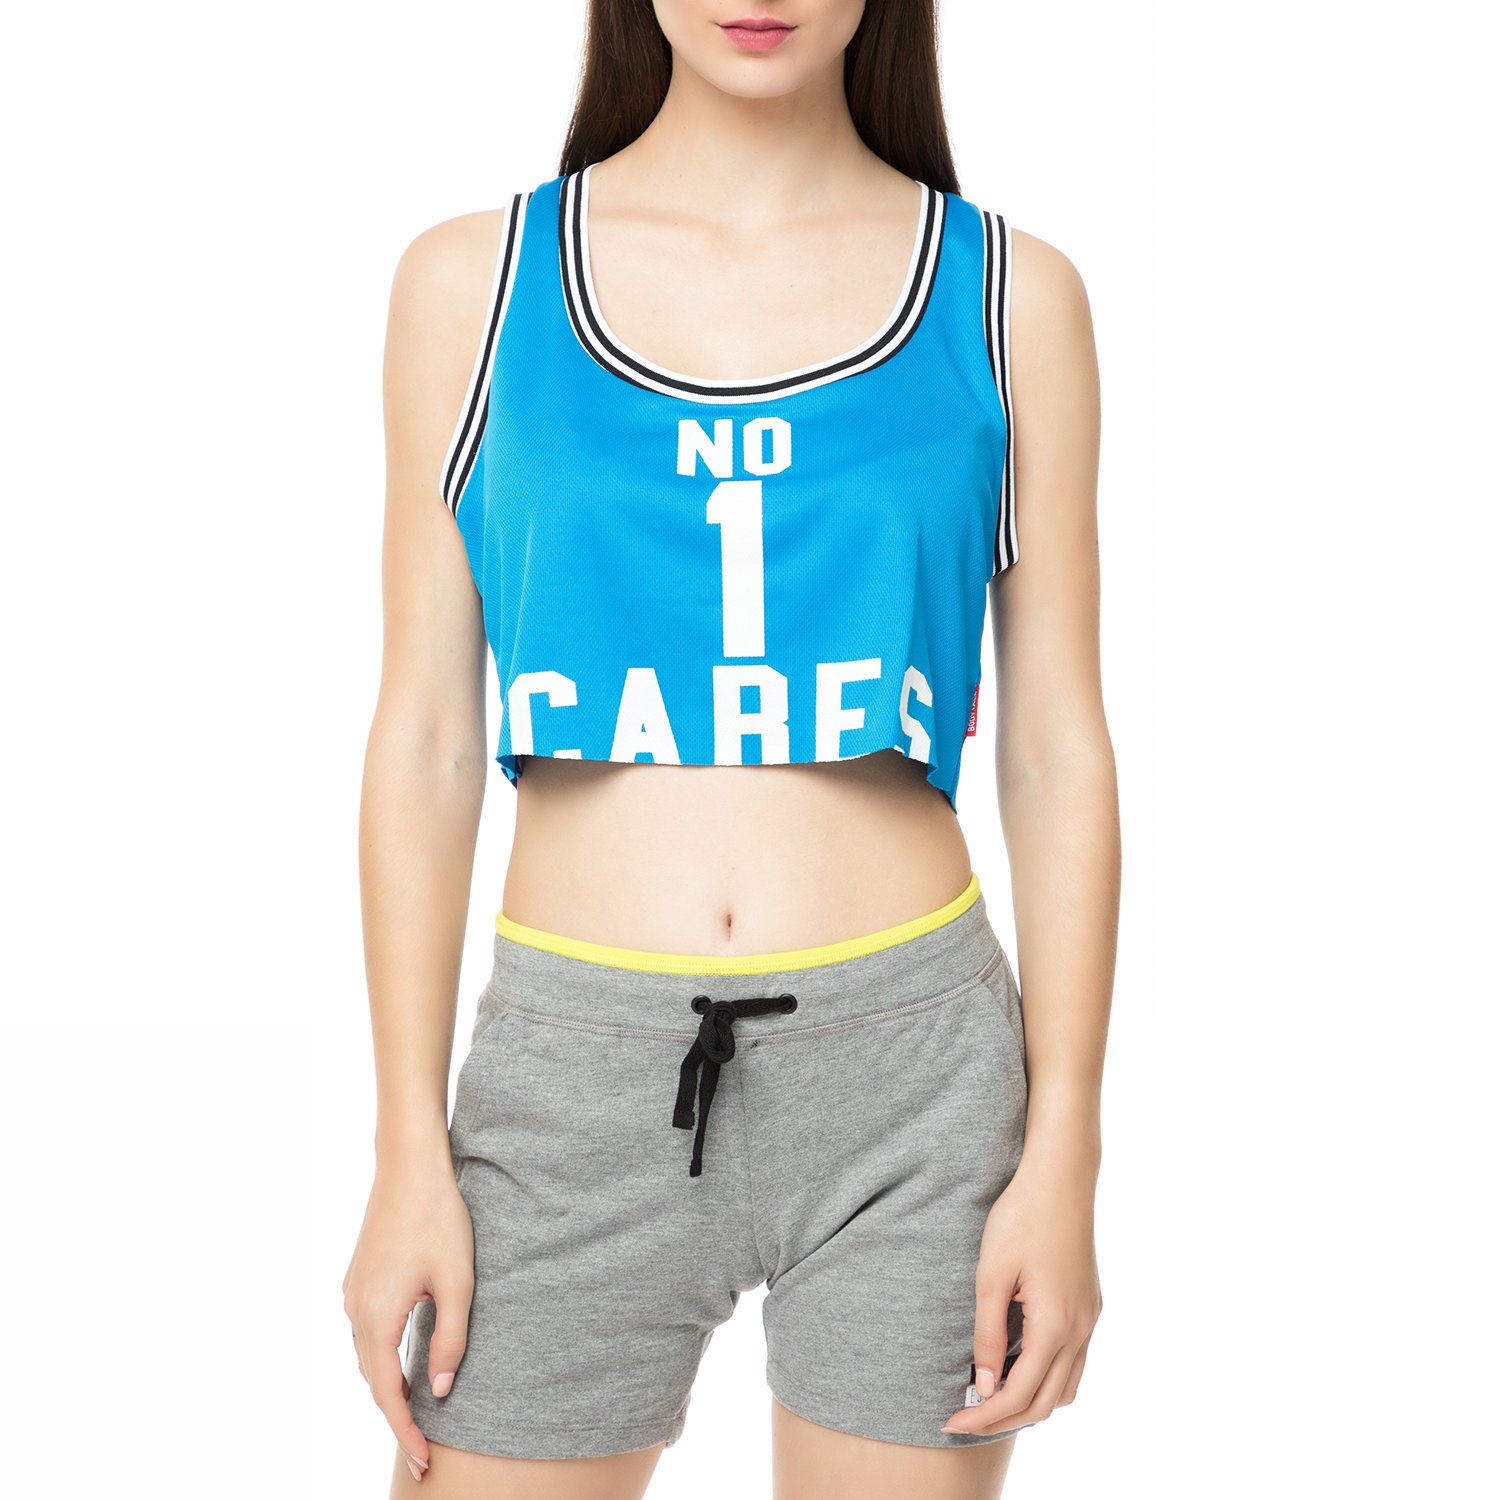 BODYTALK - Γυναικείο crop top μπλε Γυναικεία/Ρούχα/Αθλητικά/T-shirt-Τοπ